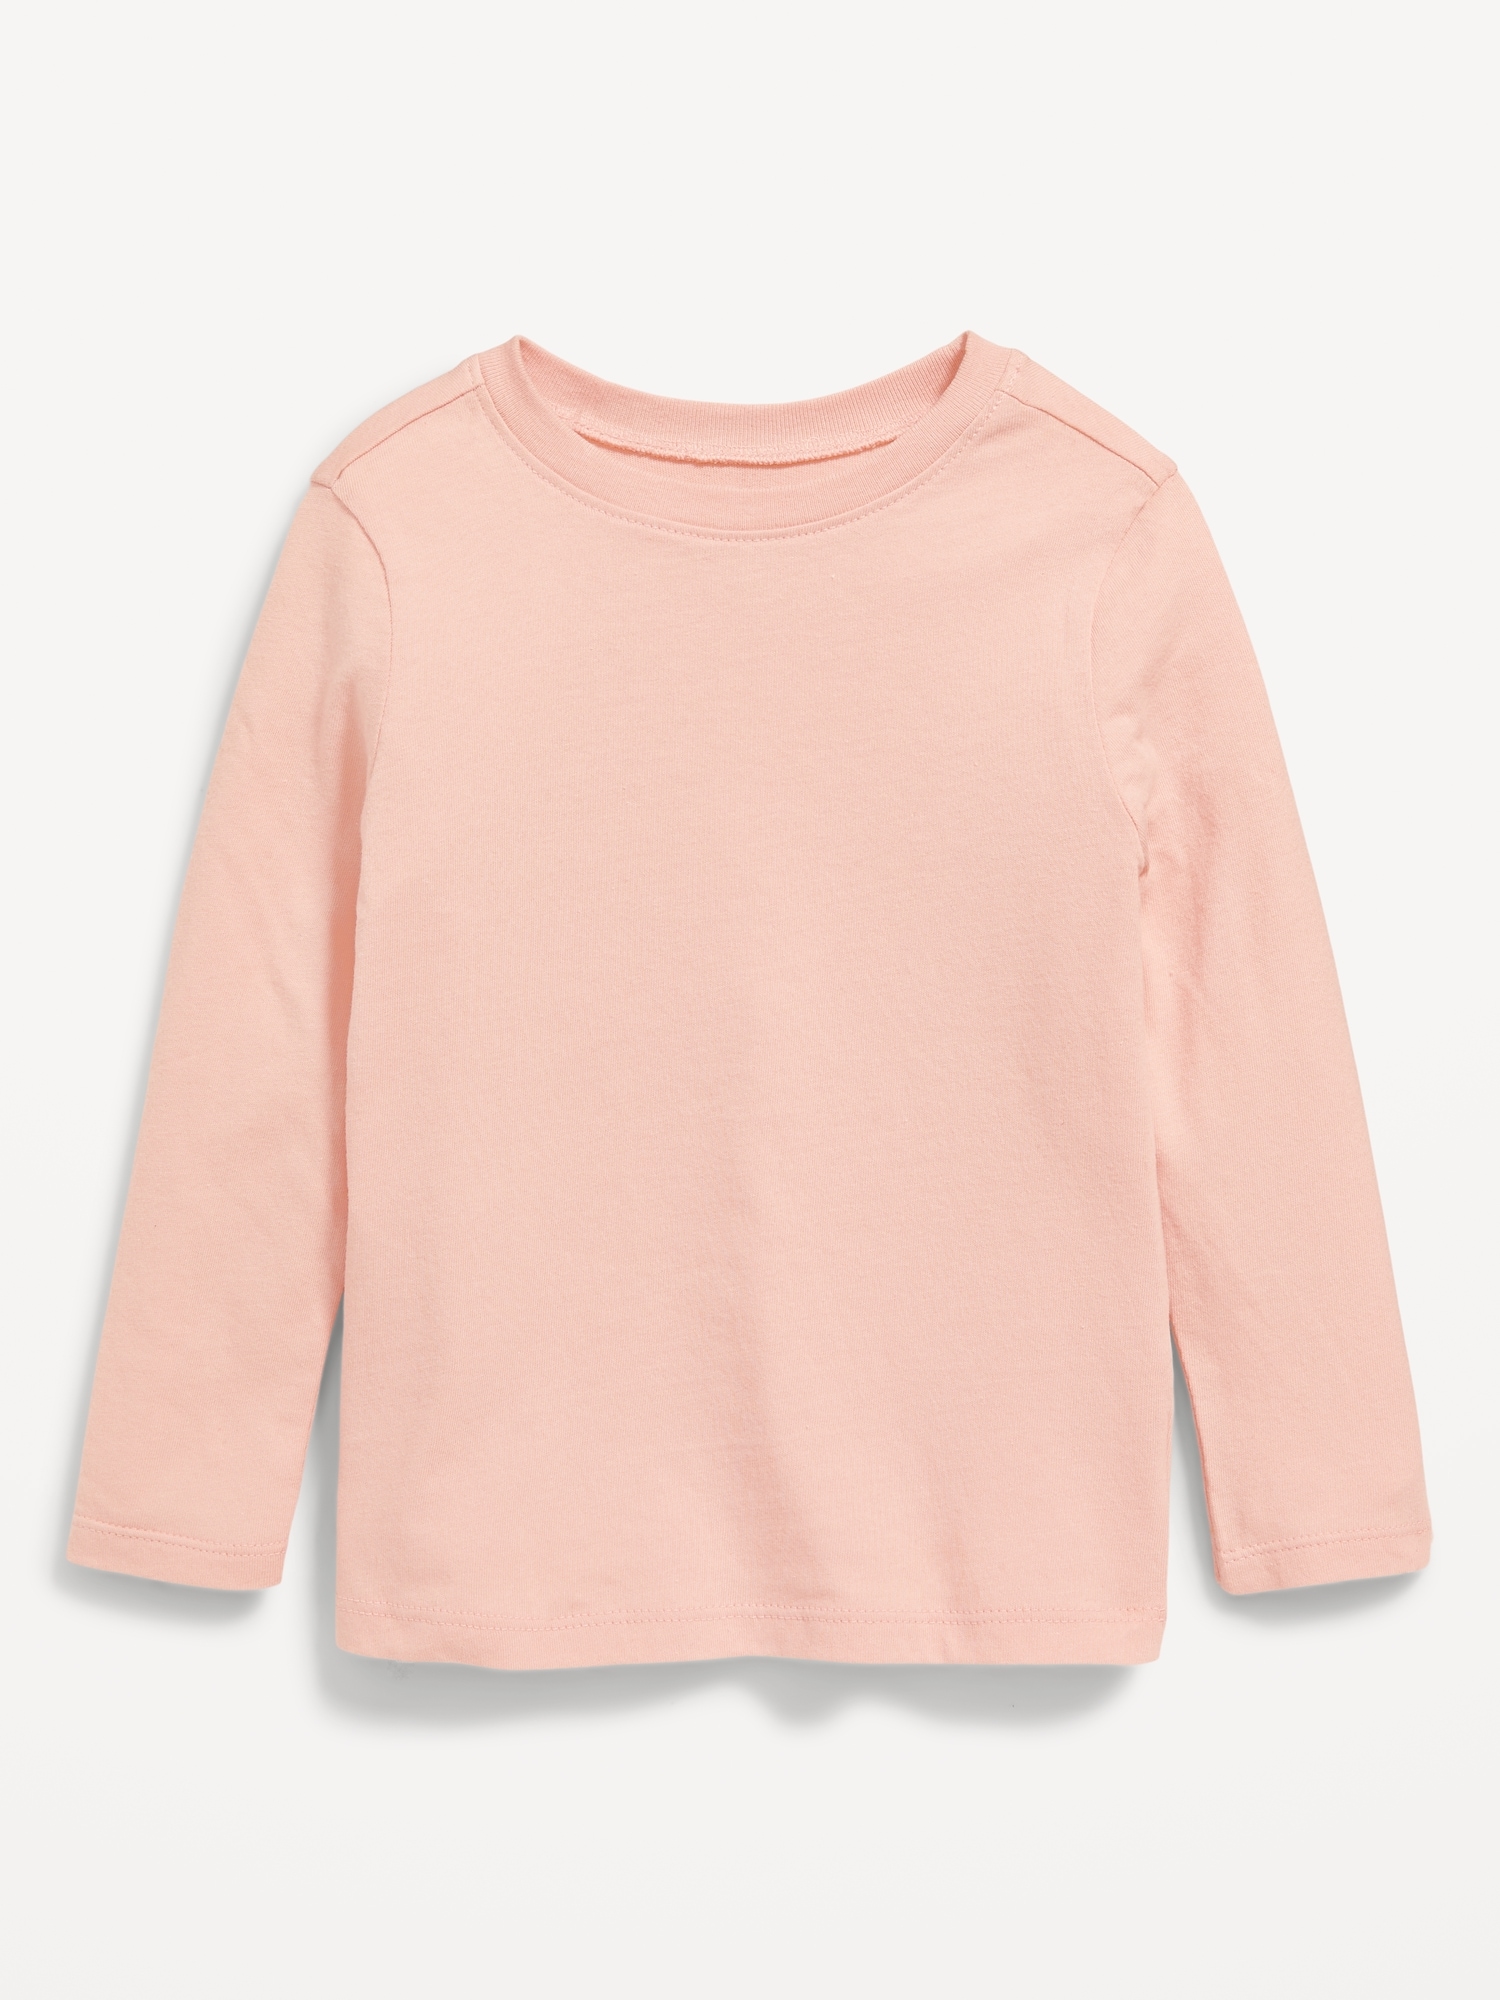 Unisex Long-Sleeve T-Shirt for Toddler Old Navy 